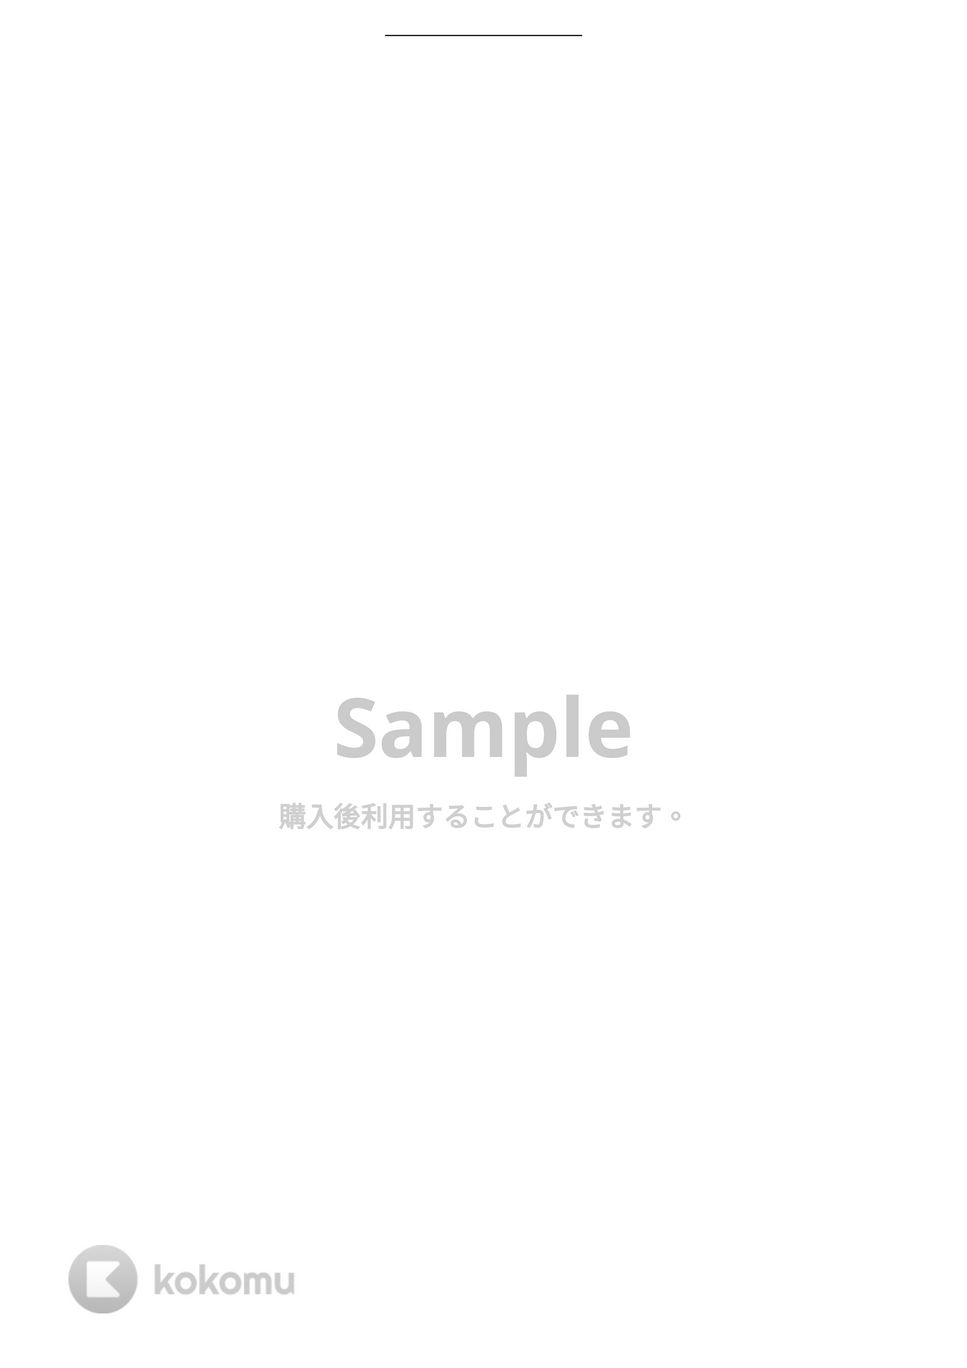 Carpenters - Superstar (Easy&Short Ver.) by 鷹城-Takajoe-